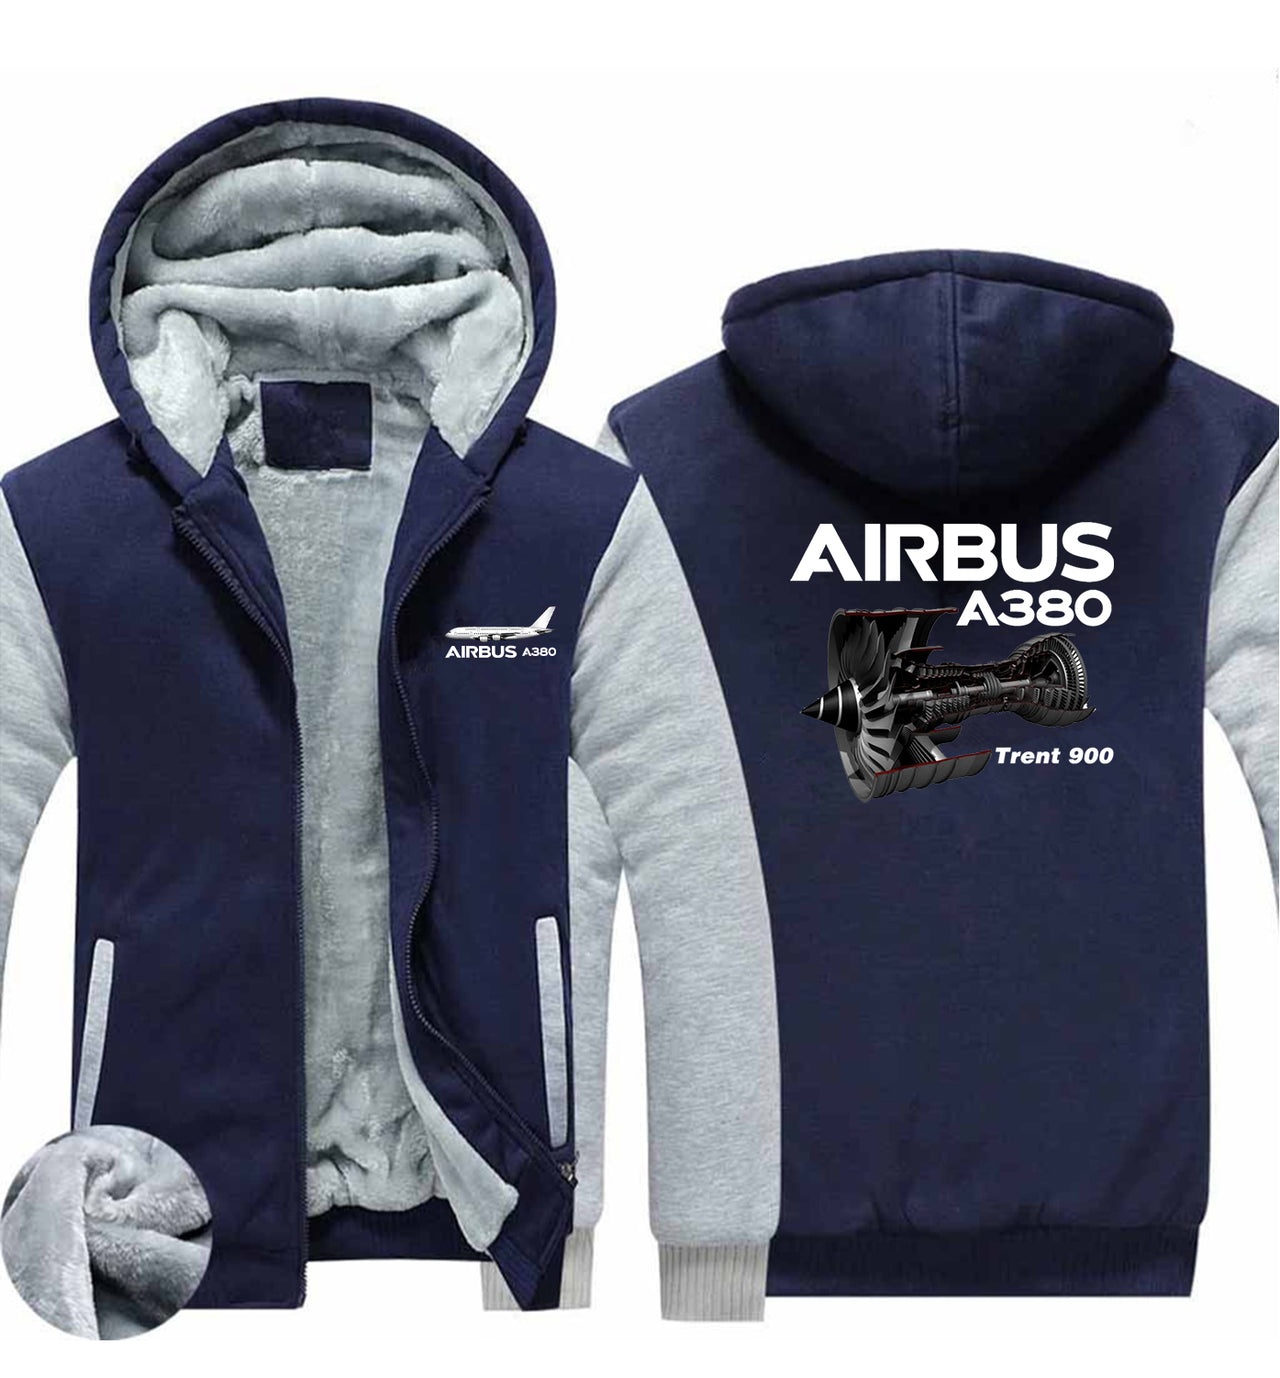 Airbus A380 & Trent 900 Engine Designed Zipped Sweatshirts